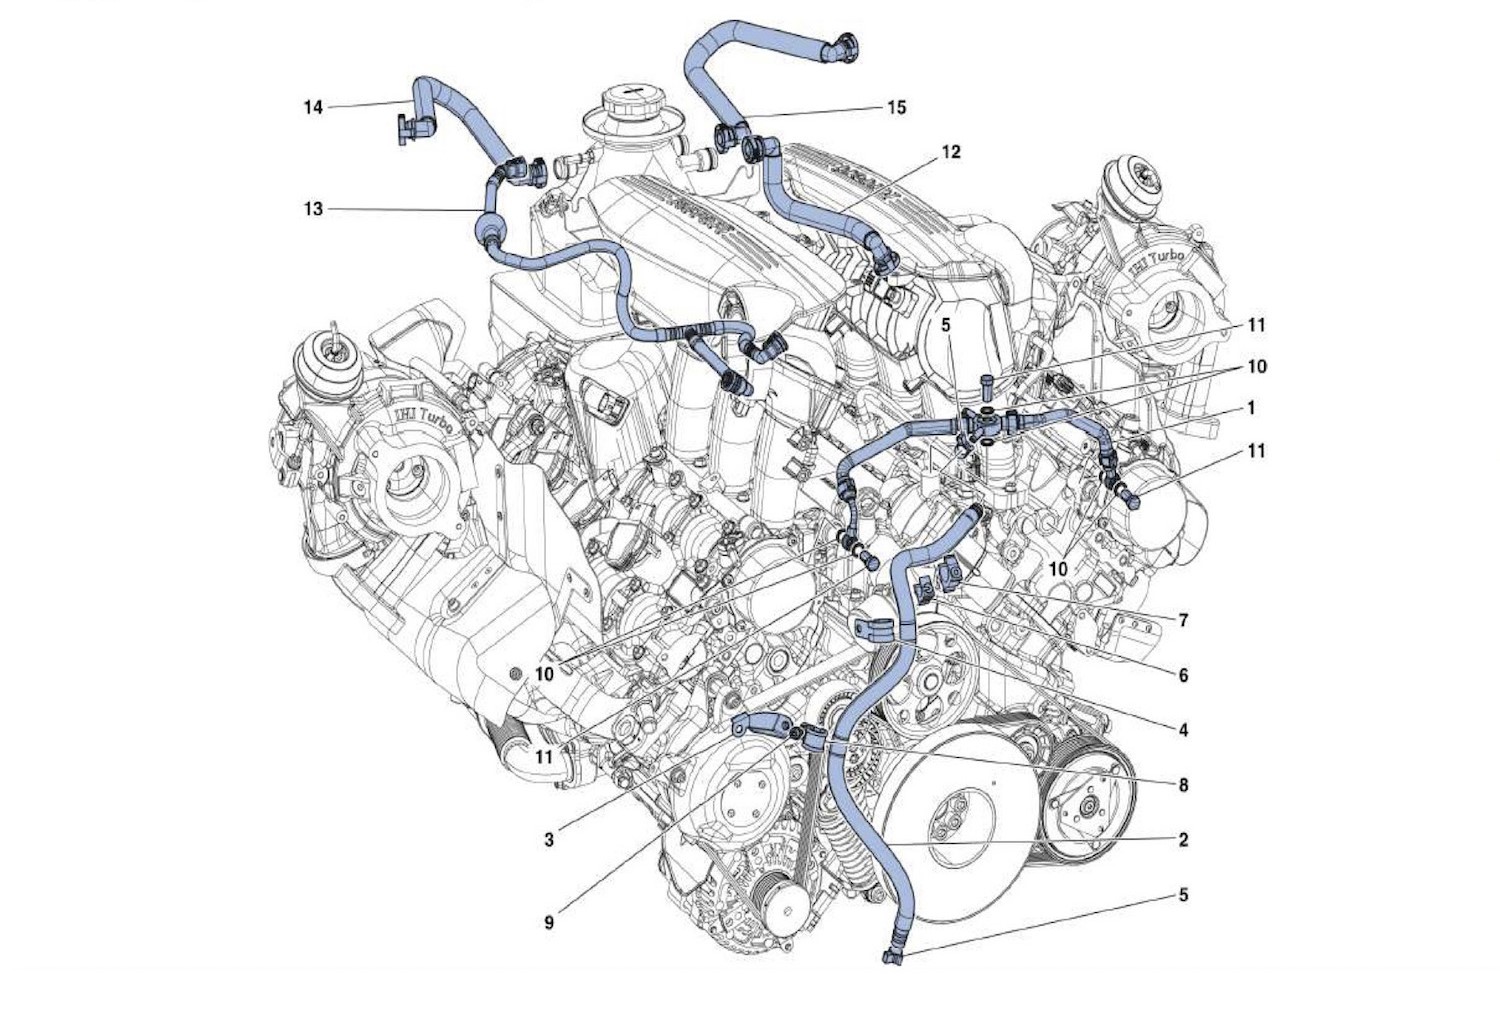 Schematic: Engine Hoses